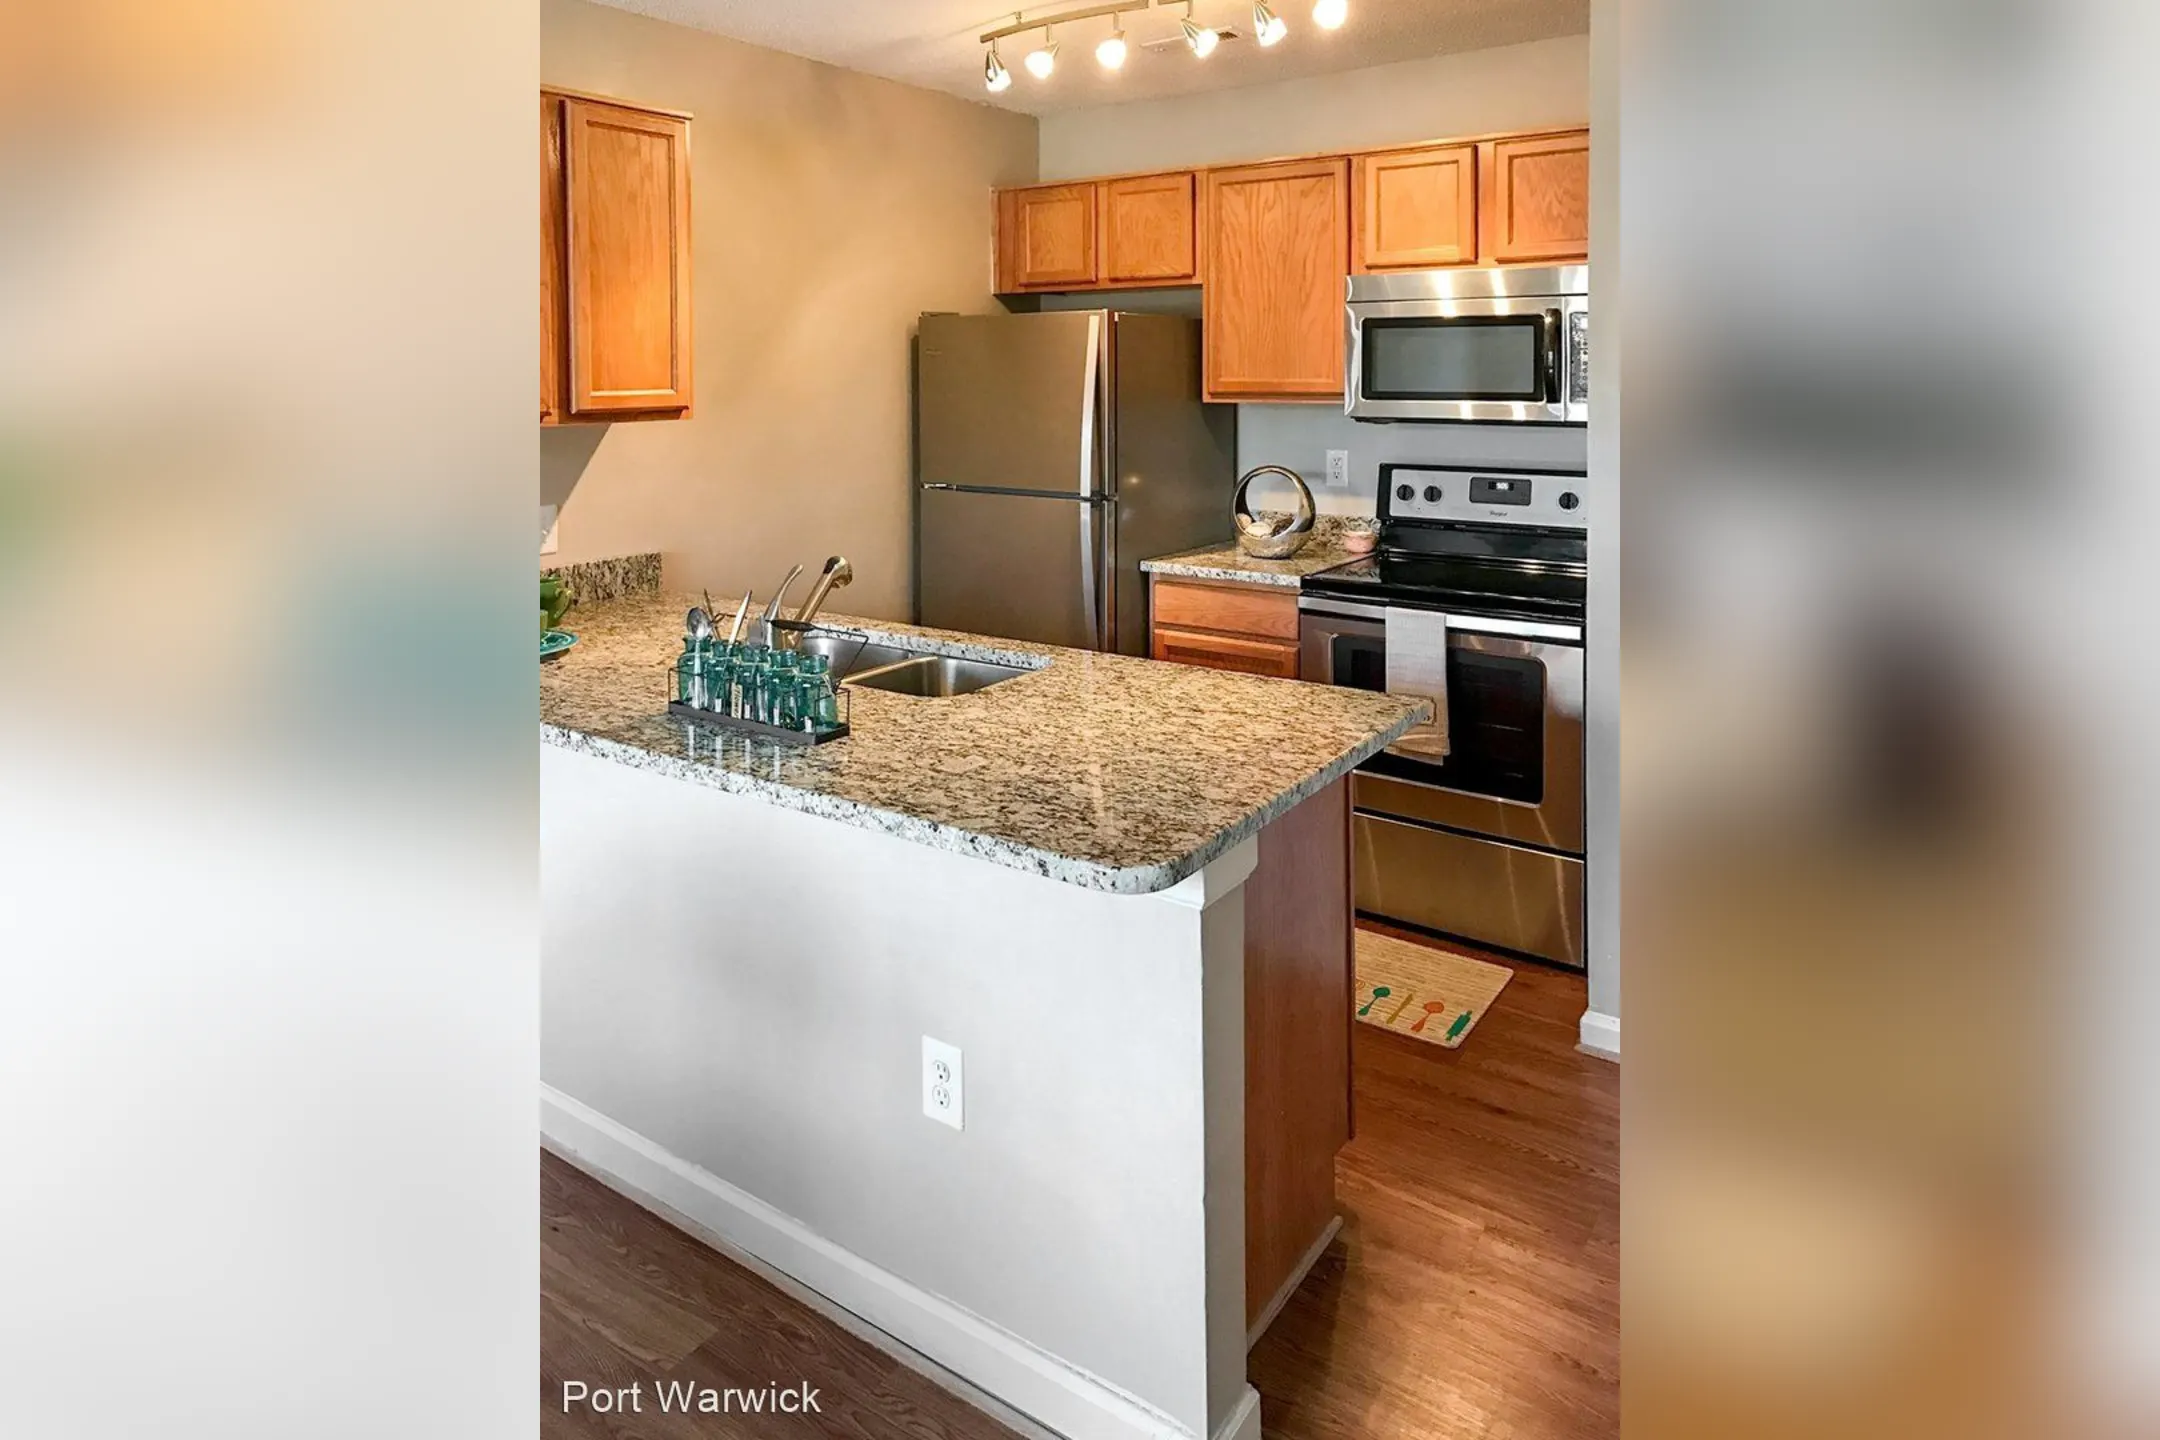 Kitchen - The Suites at Port Warwick - Newport News, VA